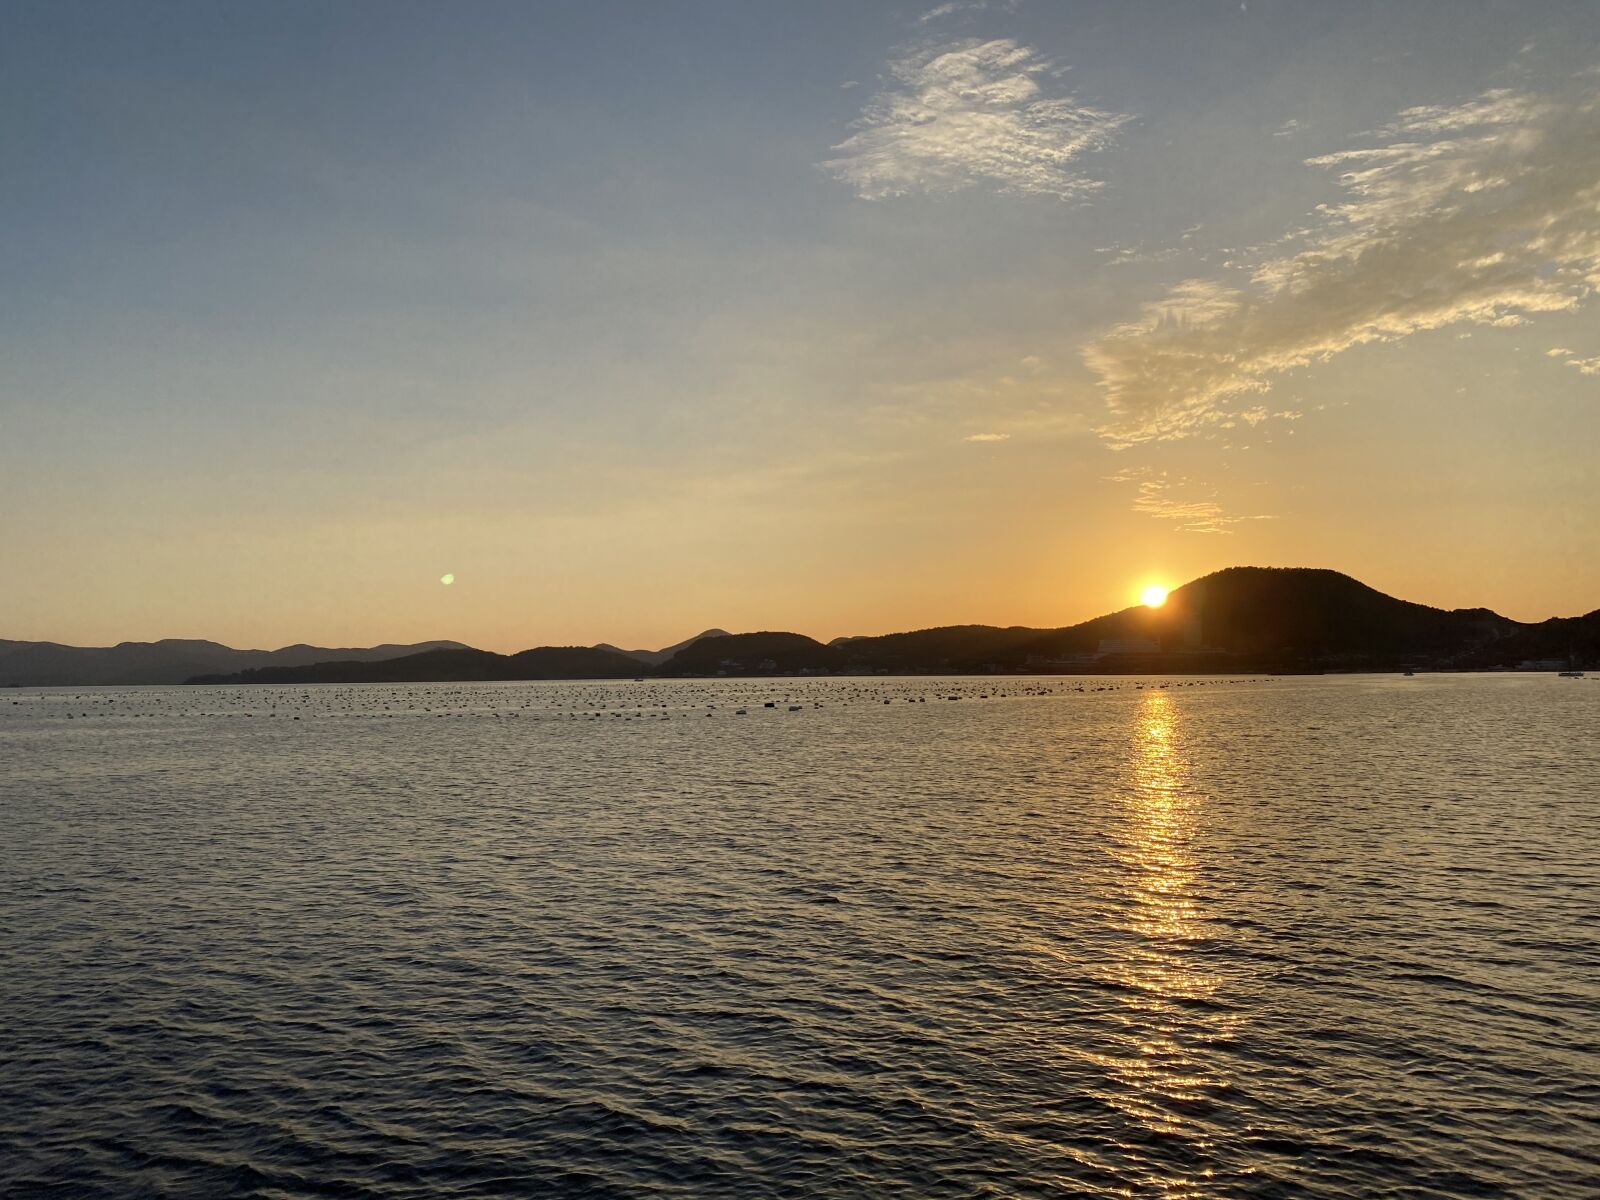 iPhone 11 back dual wide camera 4.25mm f/1.8 sample photo. Sea, sunset, beach photography